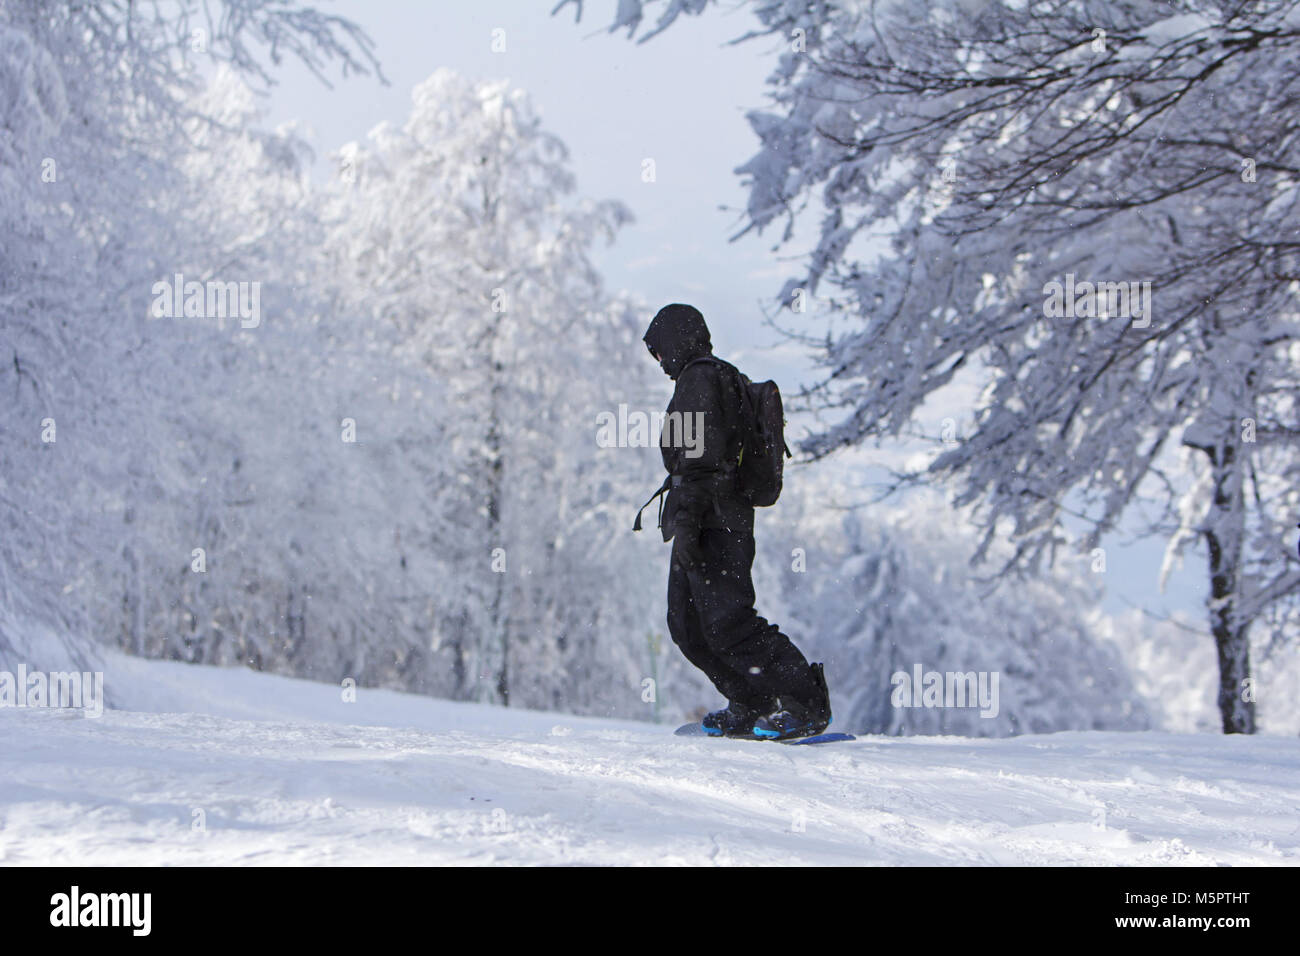 Winter Sport snowboarder am Ski slopeand Alpen Berge Landschaft Stockfoto